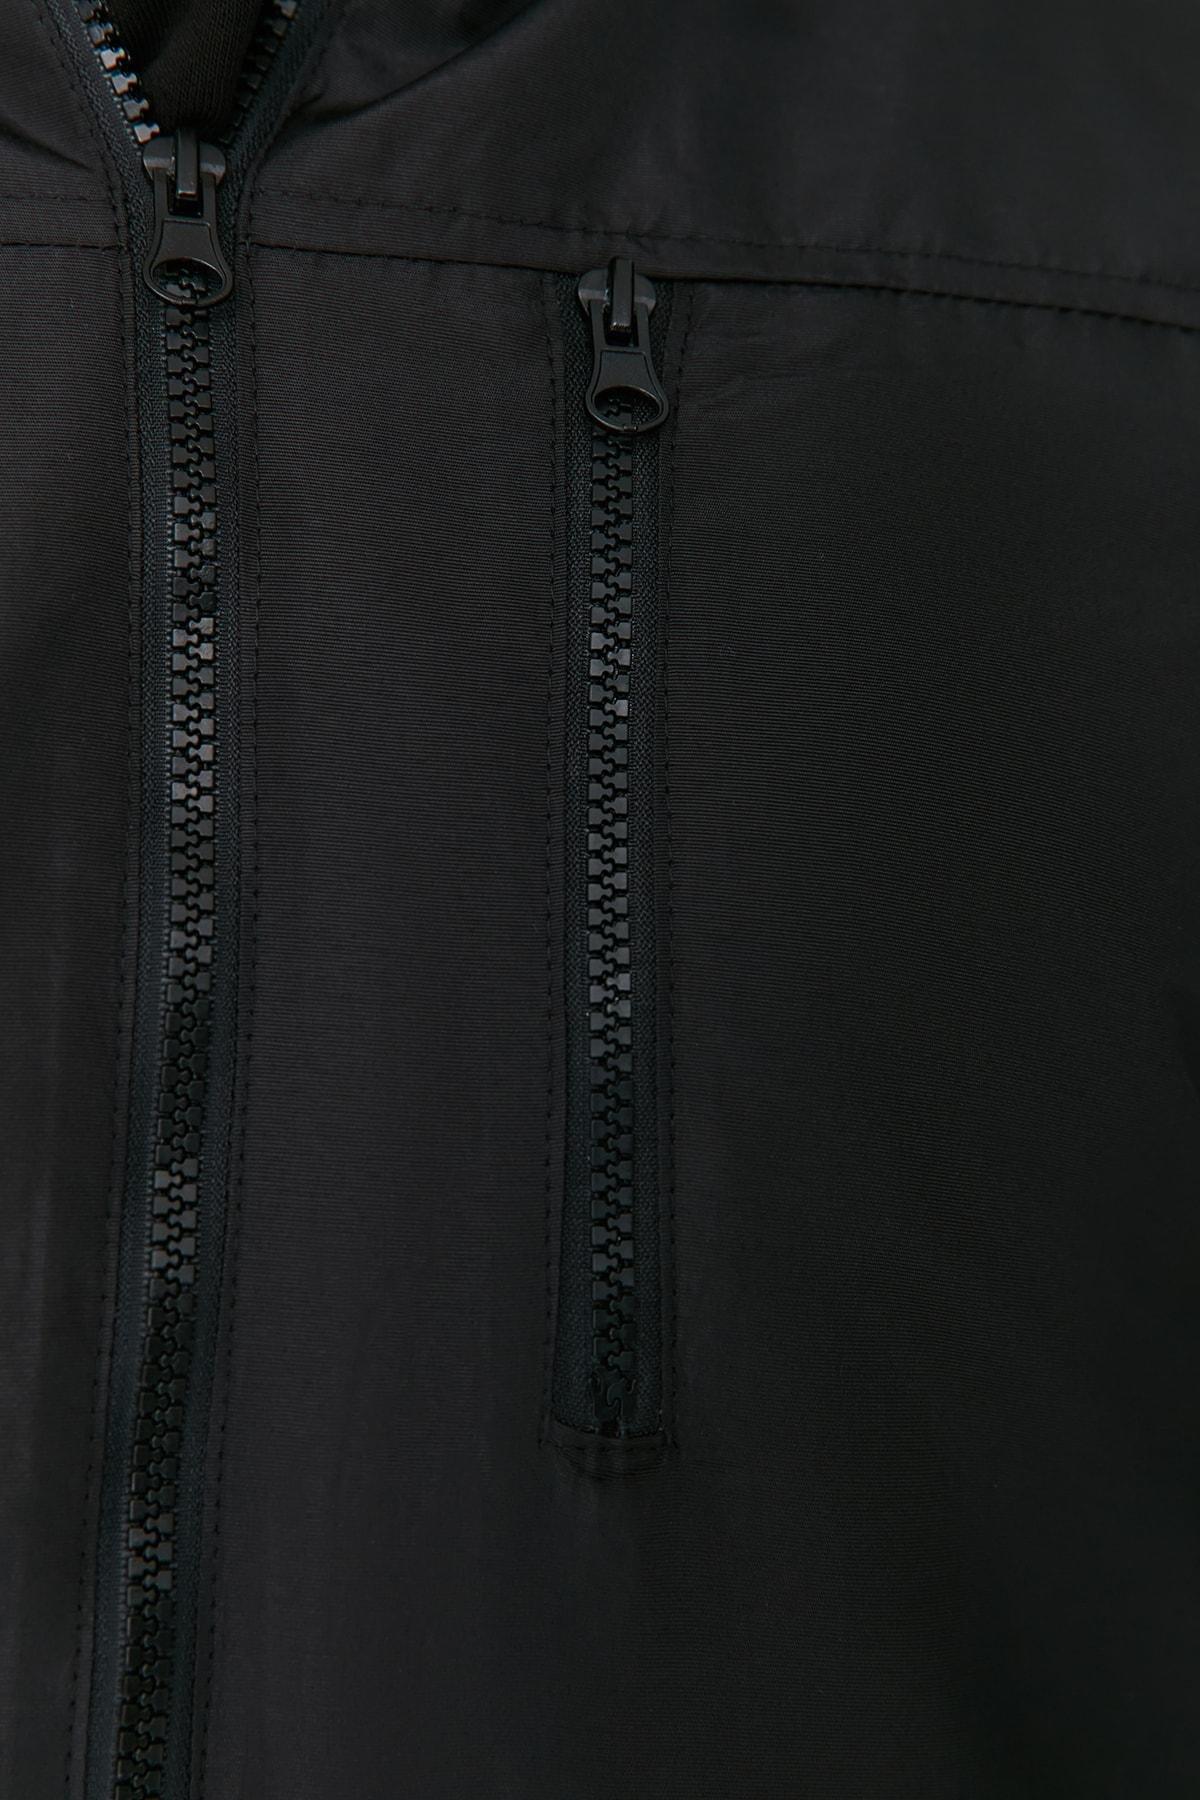 Trendyol - Black Puffer Jacket